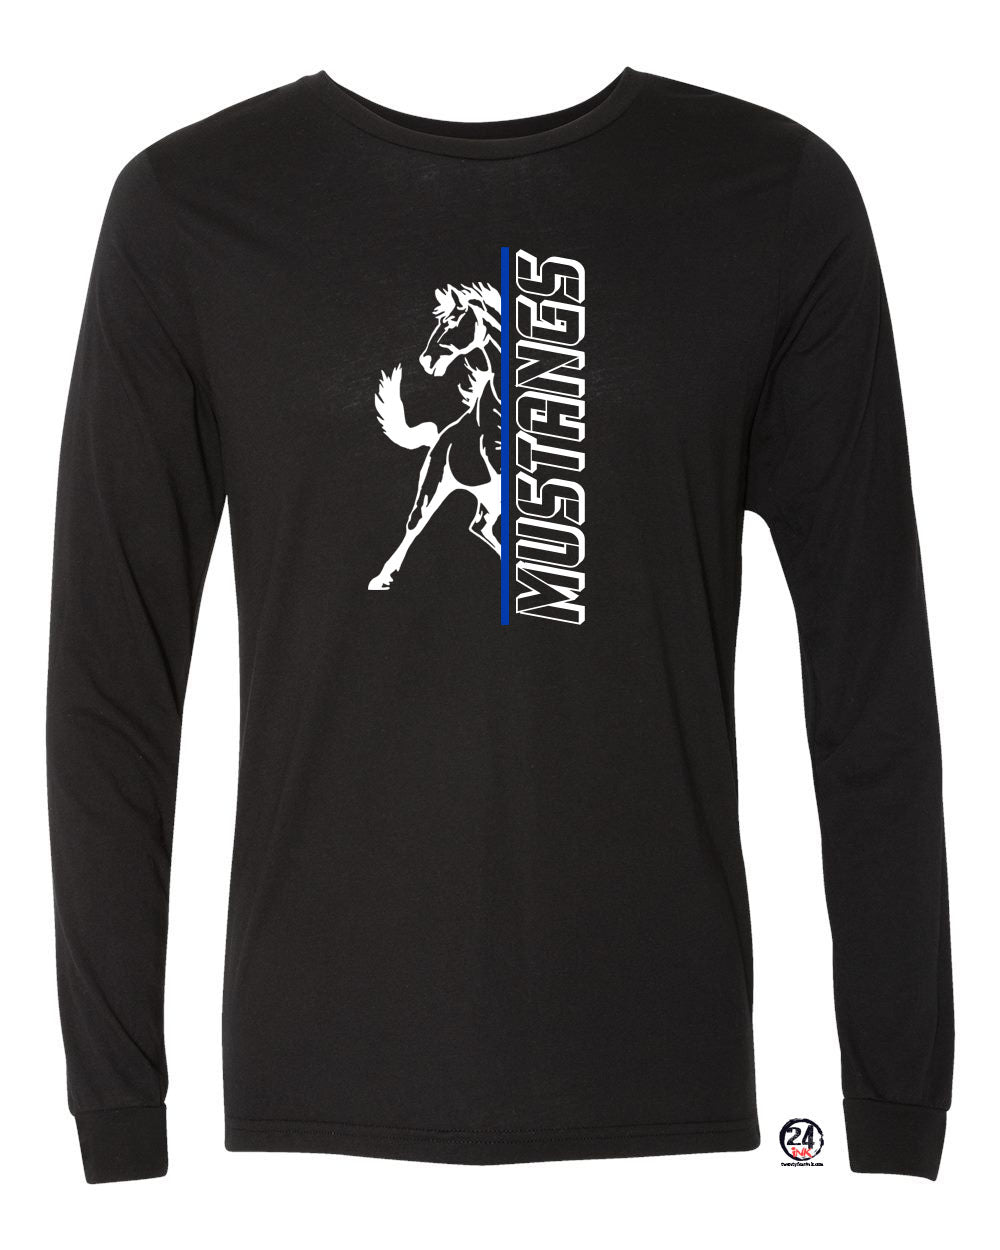 Frelinghuysen design 14 Long Sleeve Shirt